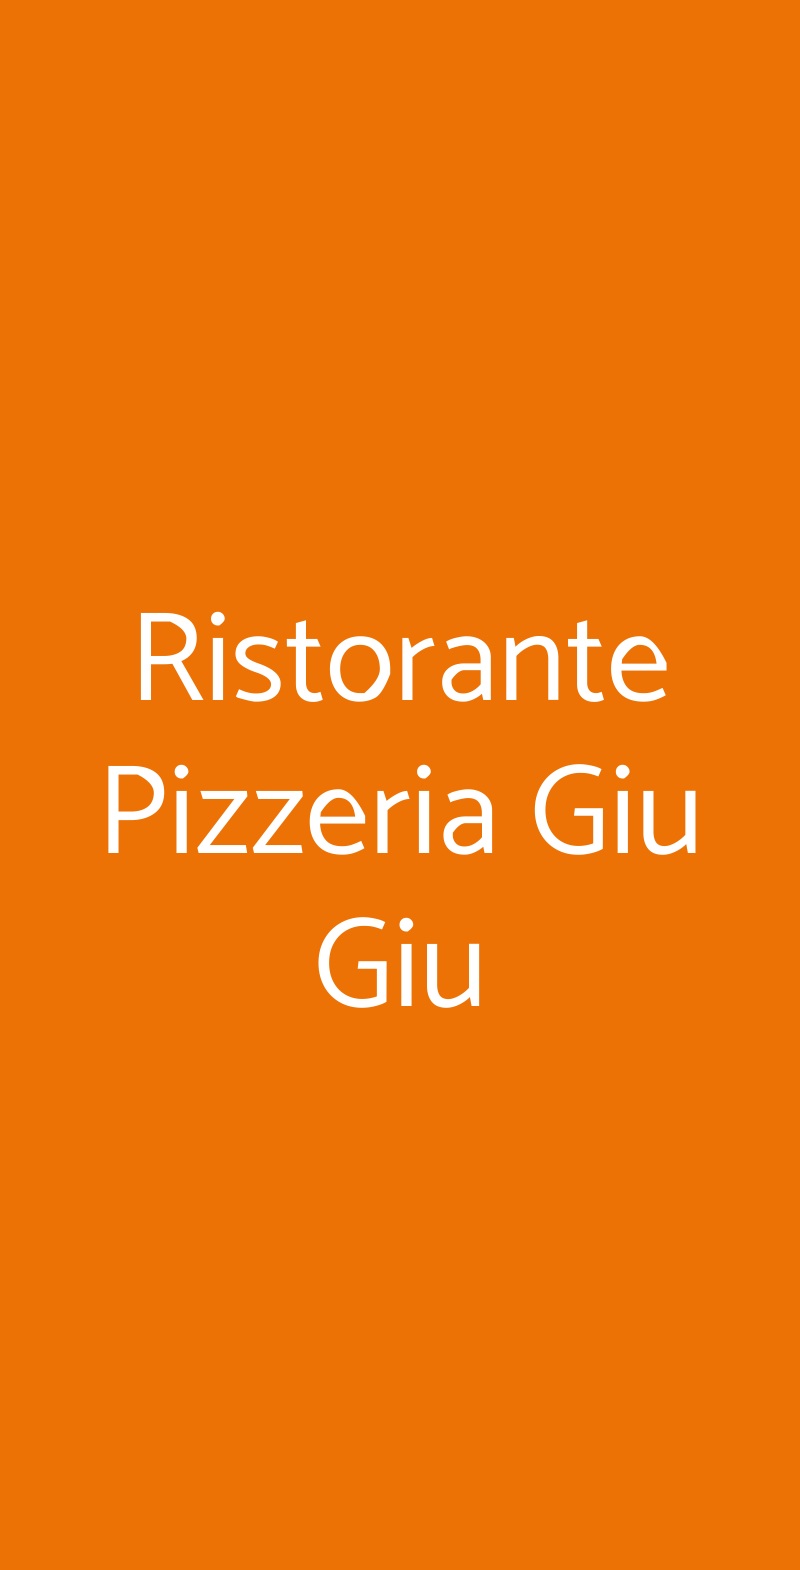 Ristorante Pizzeria Giu Giu Napoli menù 1 pagina